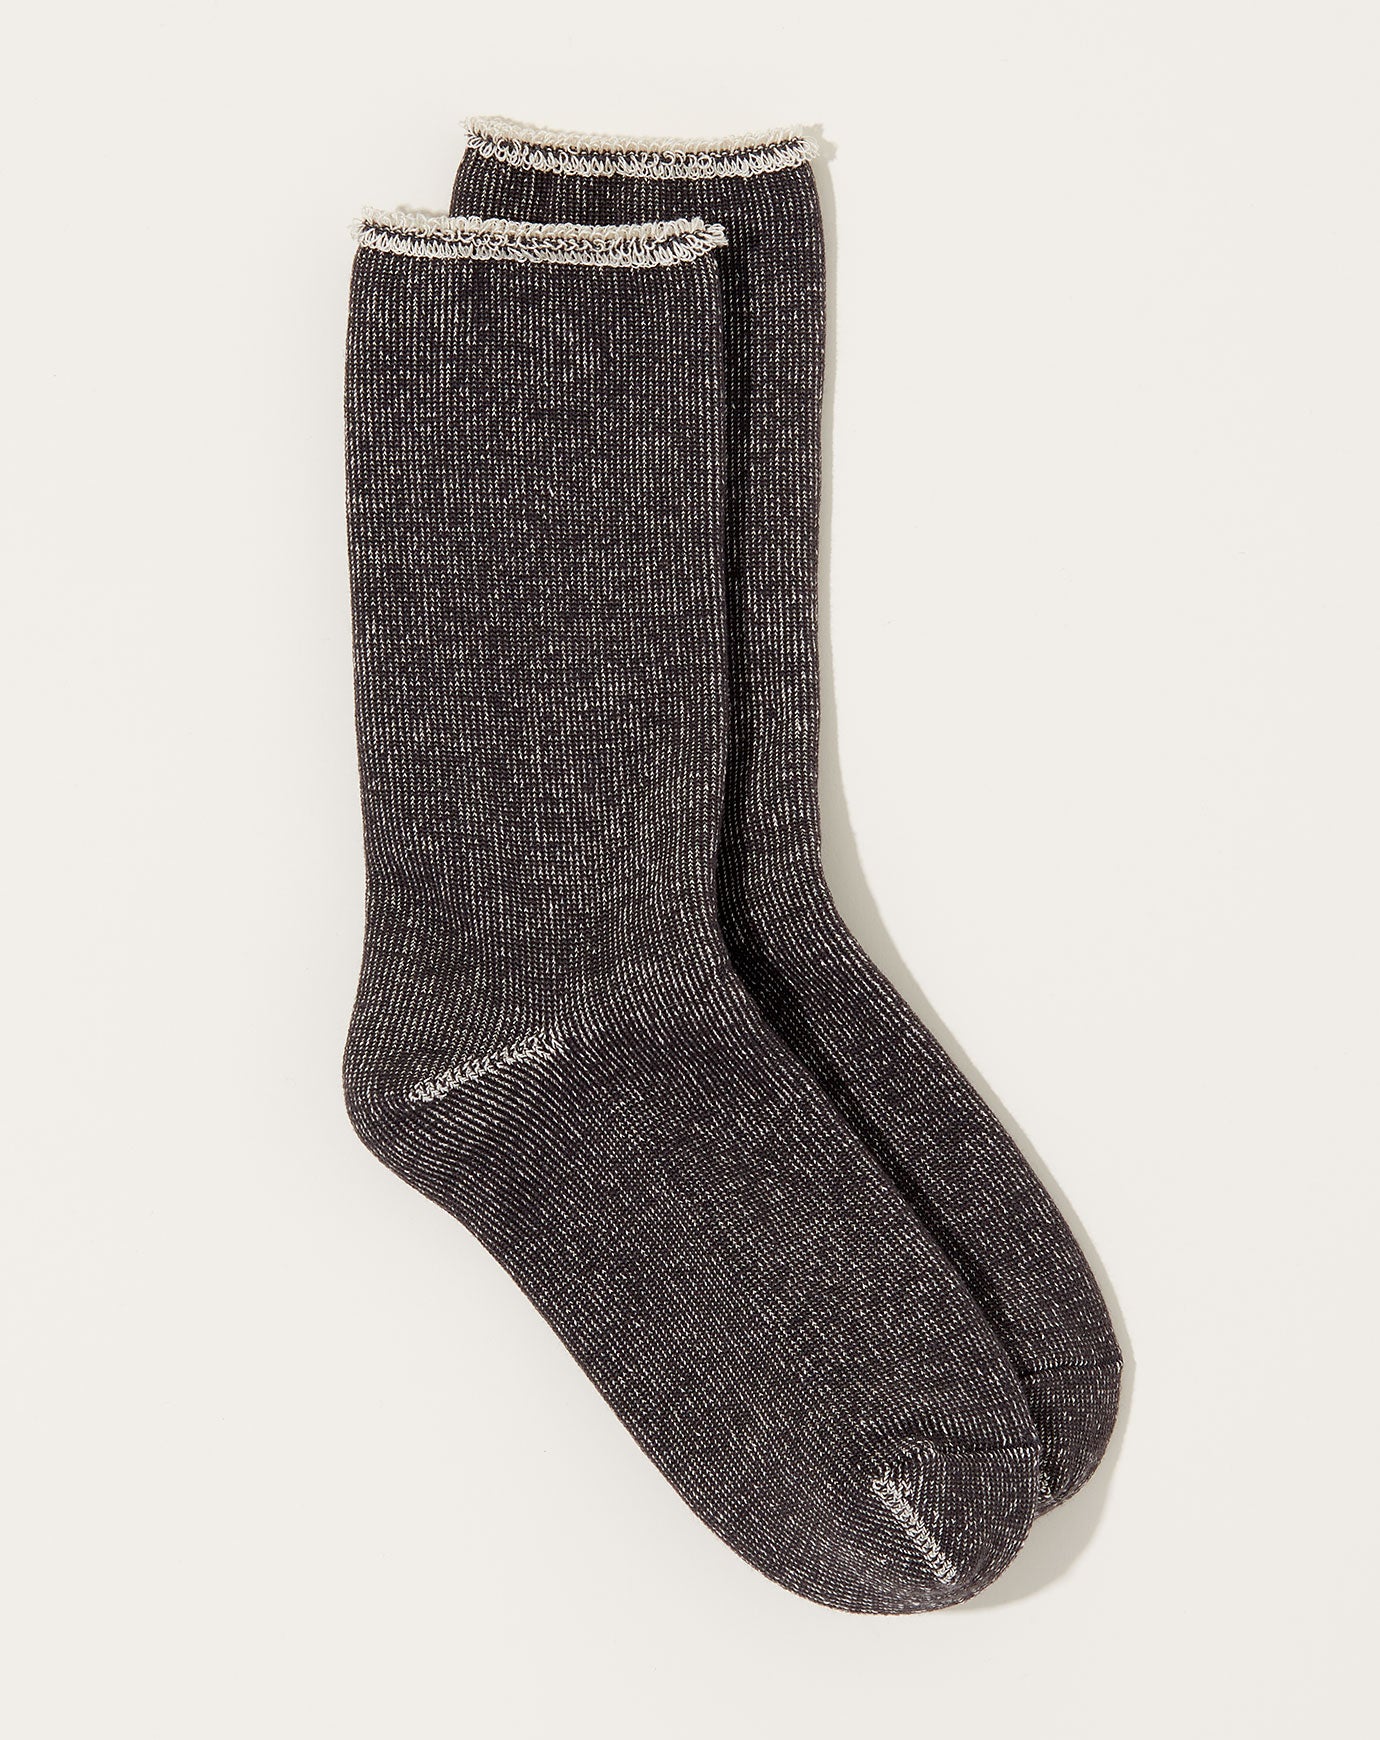 Socks that keep you feeling comfy at home｜はくひとおもいストーリー｜NISHIGUCHI  KUTSUSHITA｜NISHIGUCHI KUTSUSHITA is a Japanese sock company established in  1950.